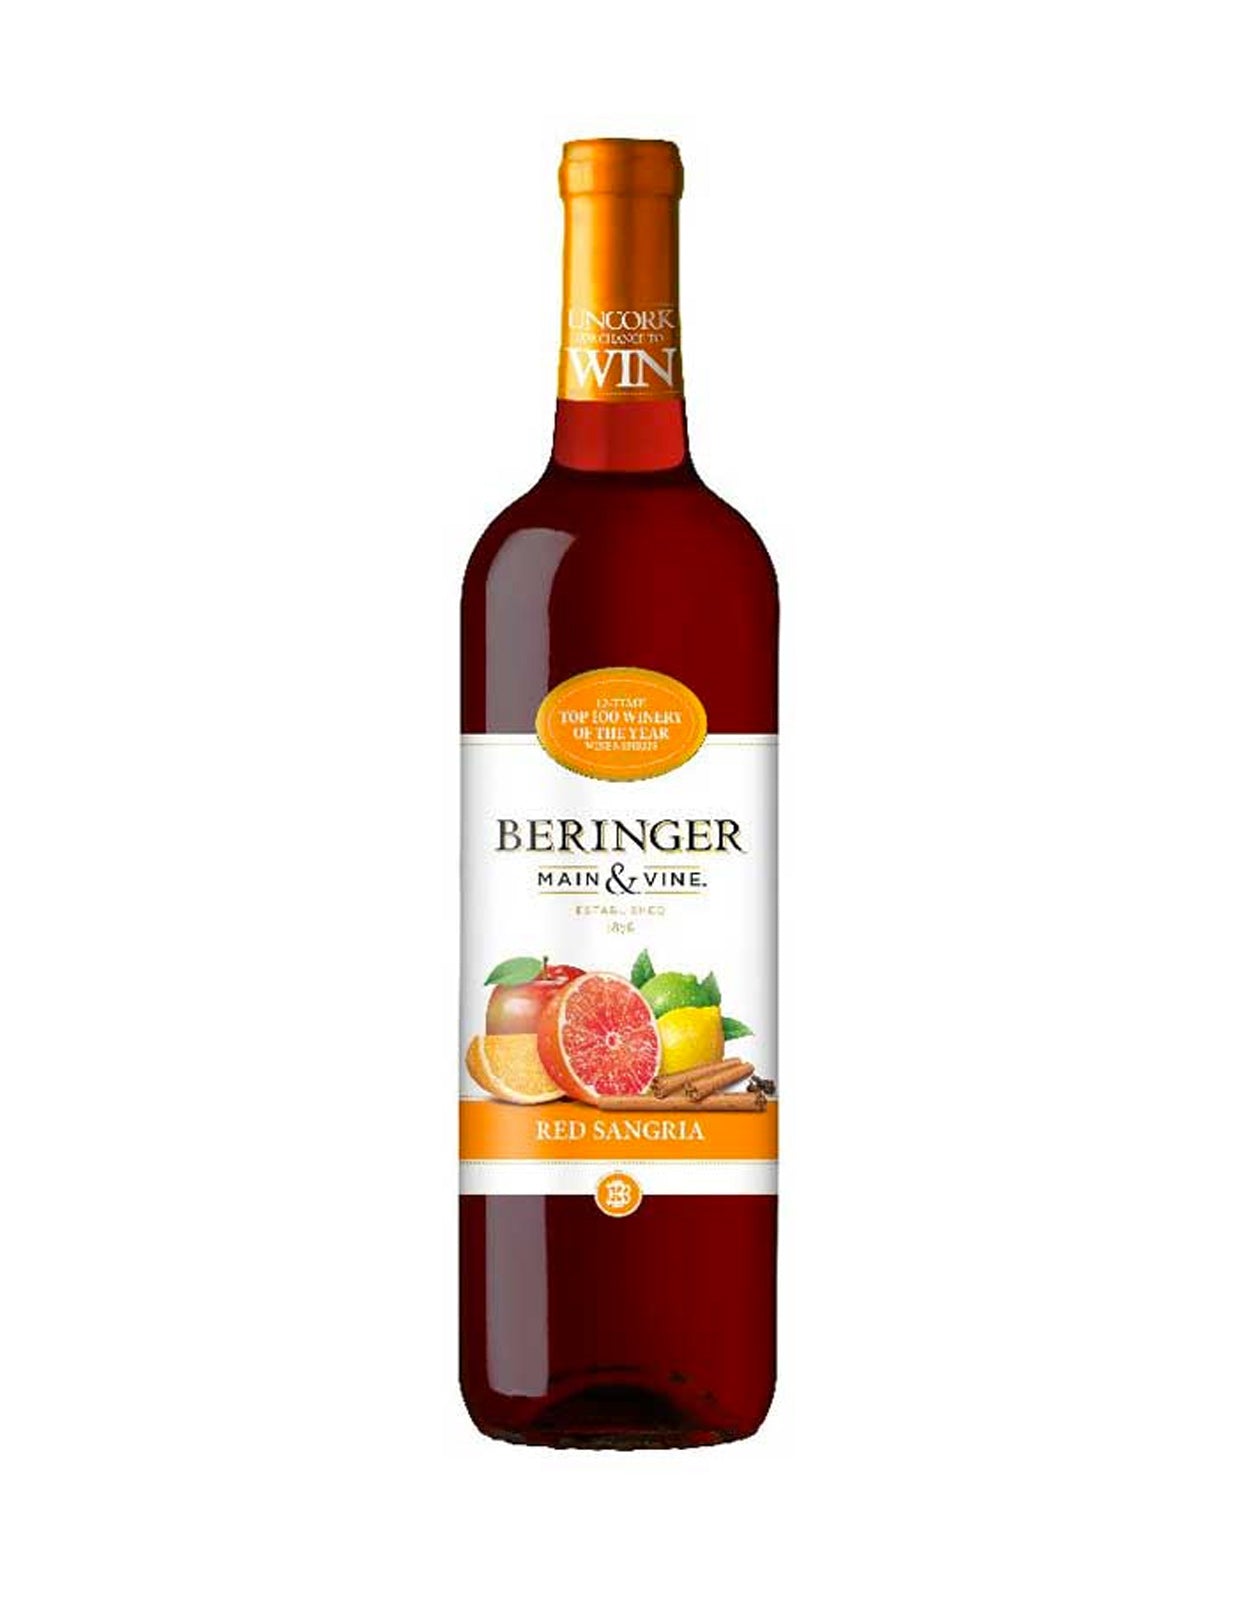 Beringer Red Sangria Main & Vine (NV)